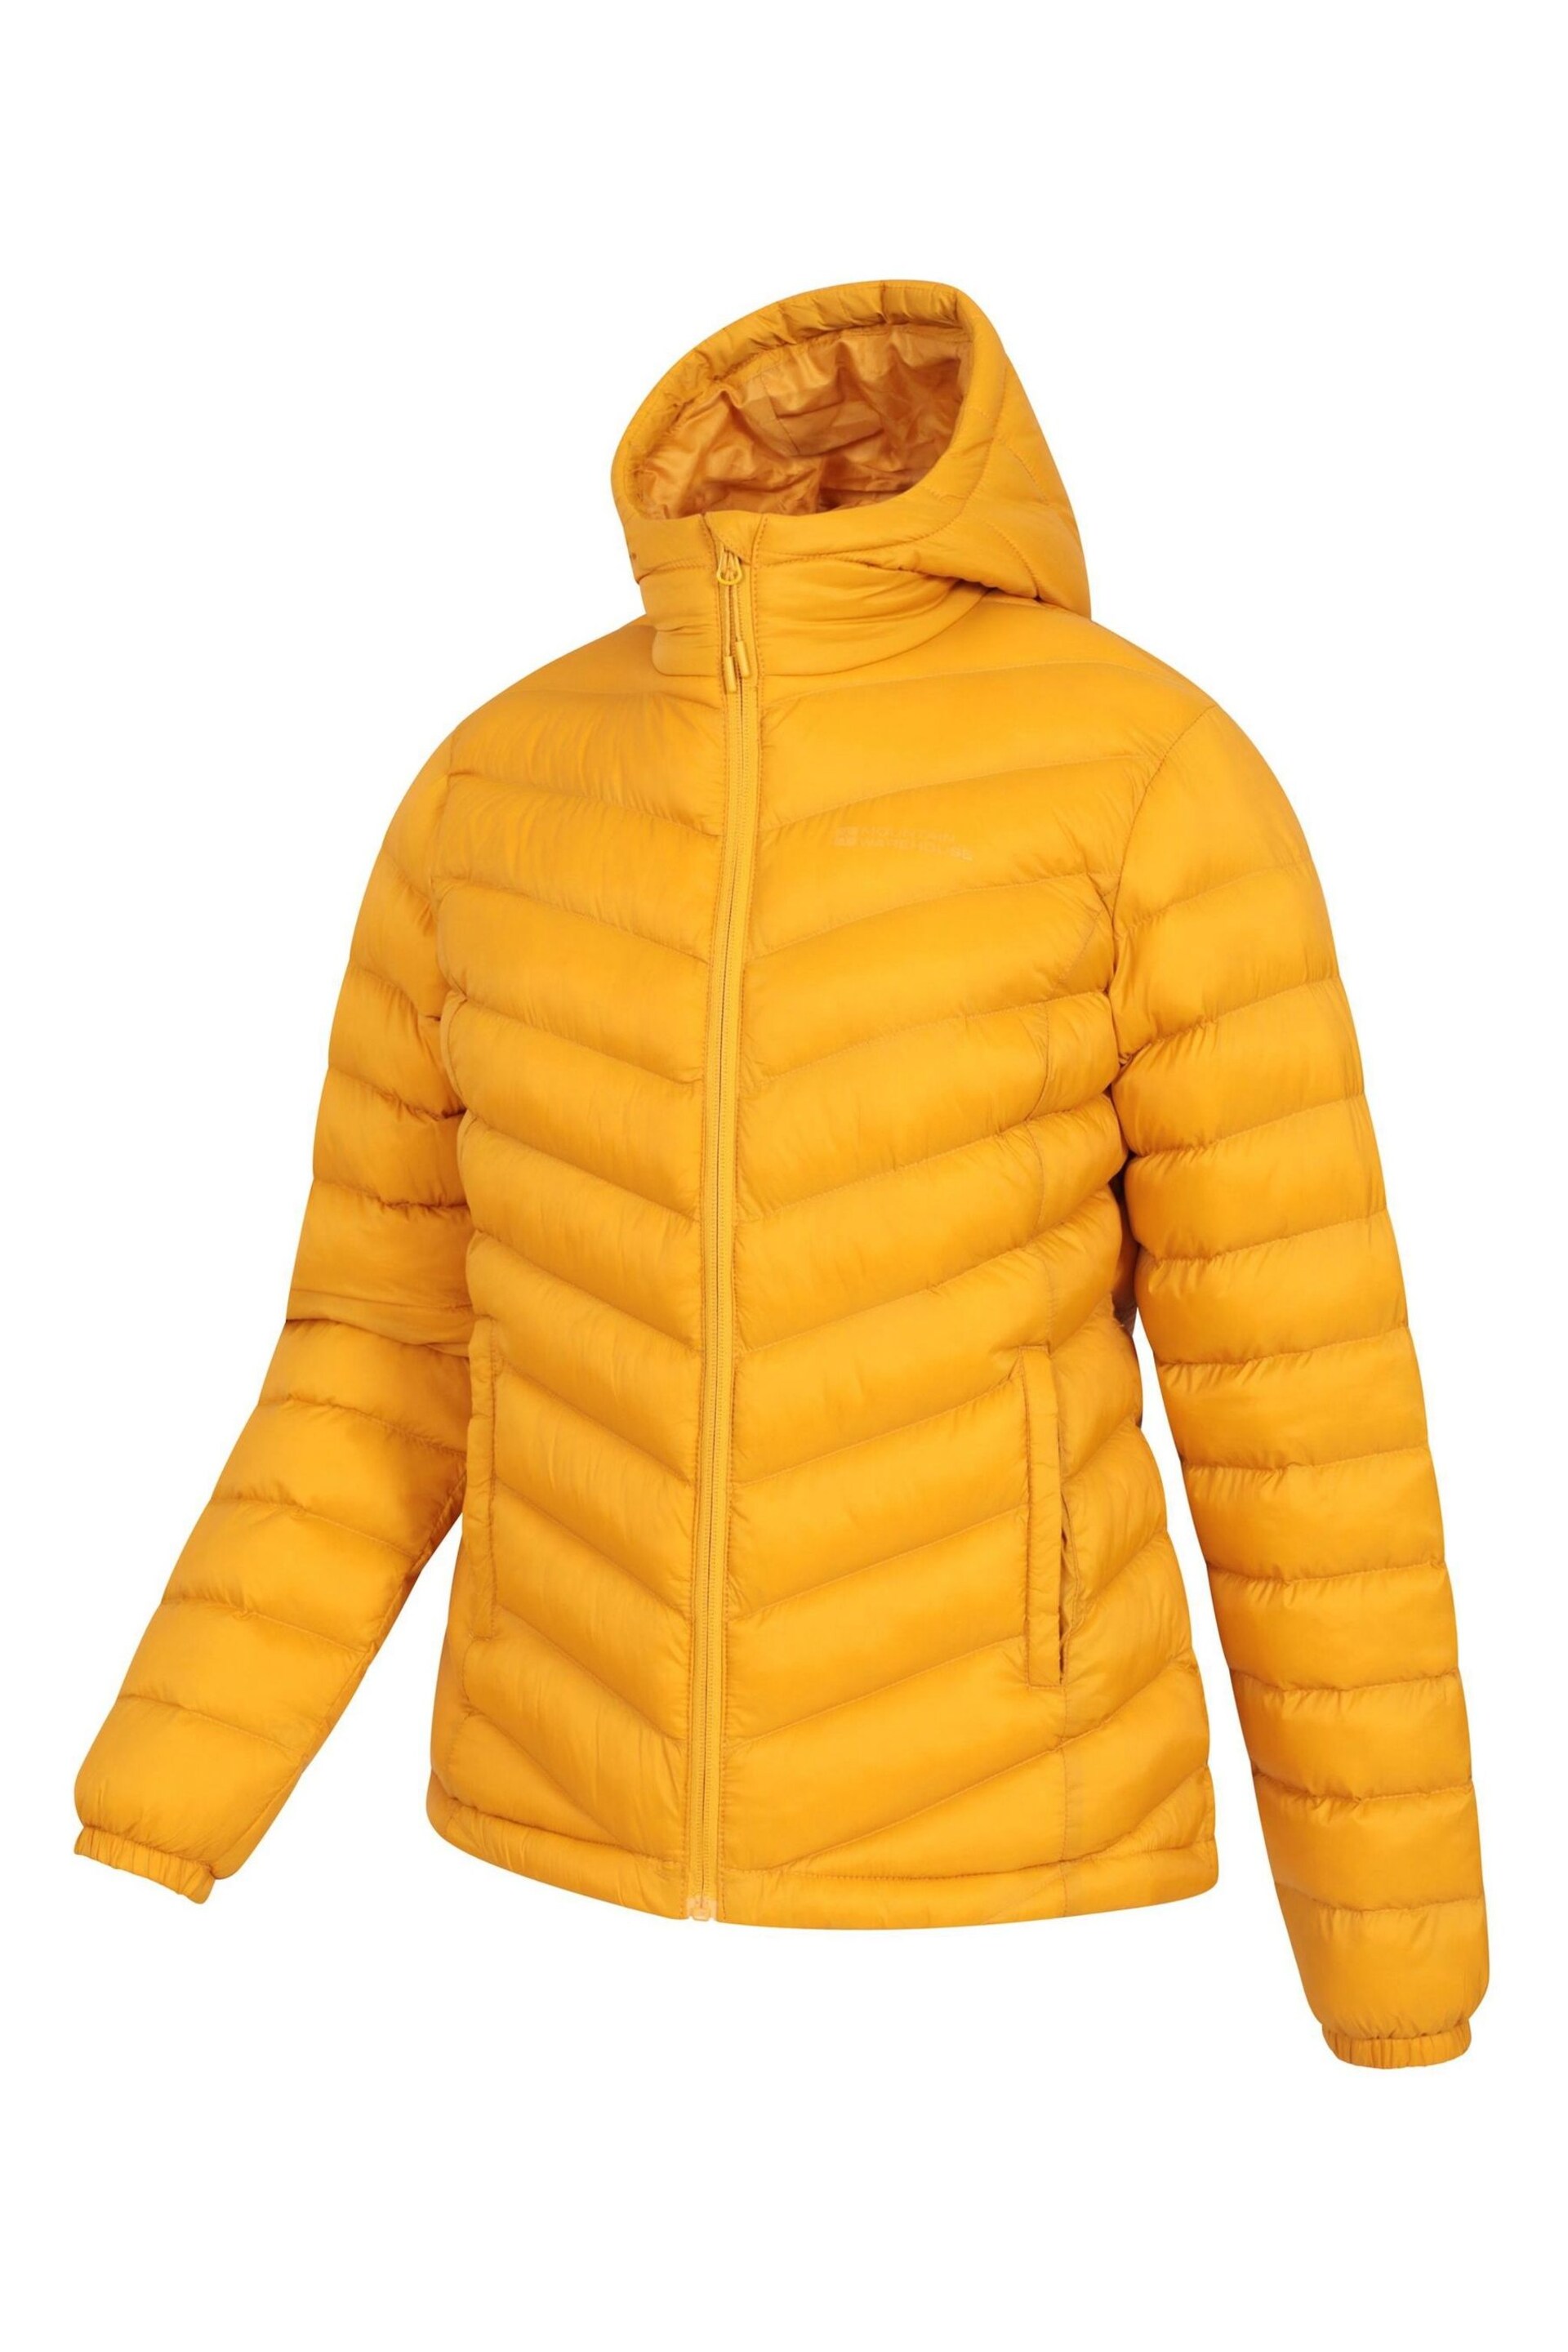 Mountain Warehouse Yellow Womens Seasons Water Resistant Padded Jacket - Image 6 of 7